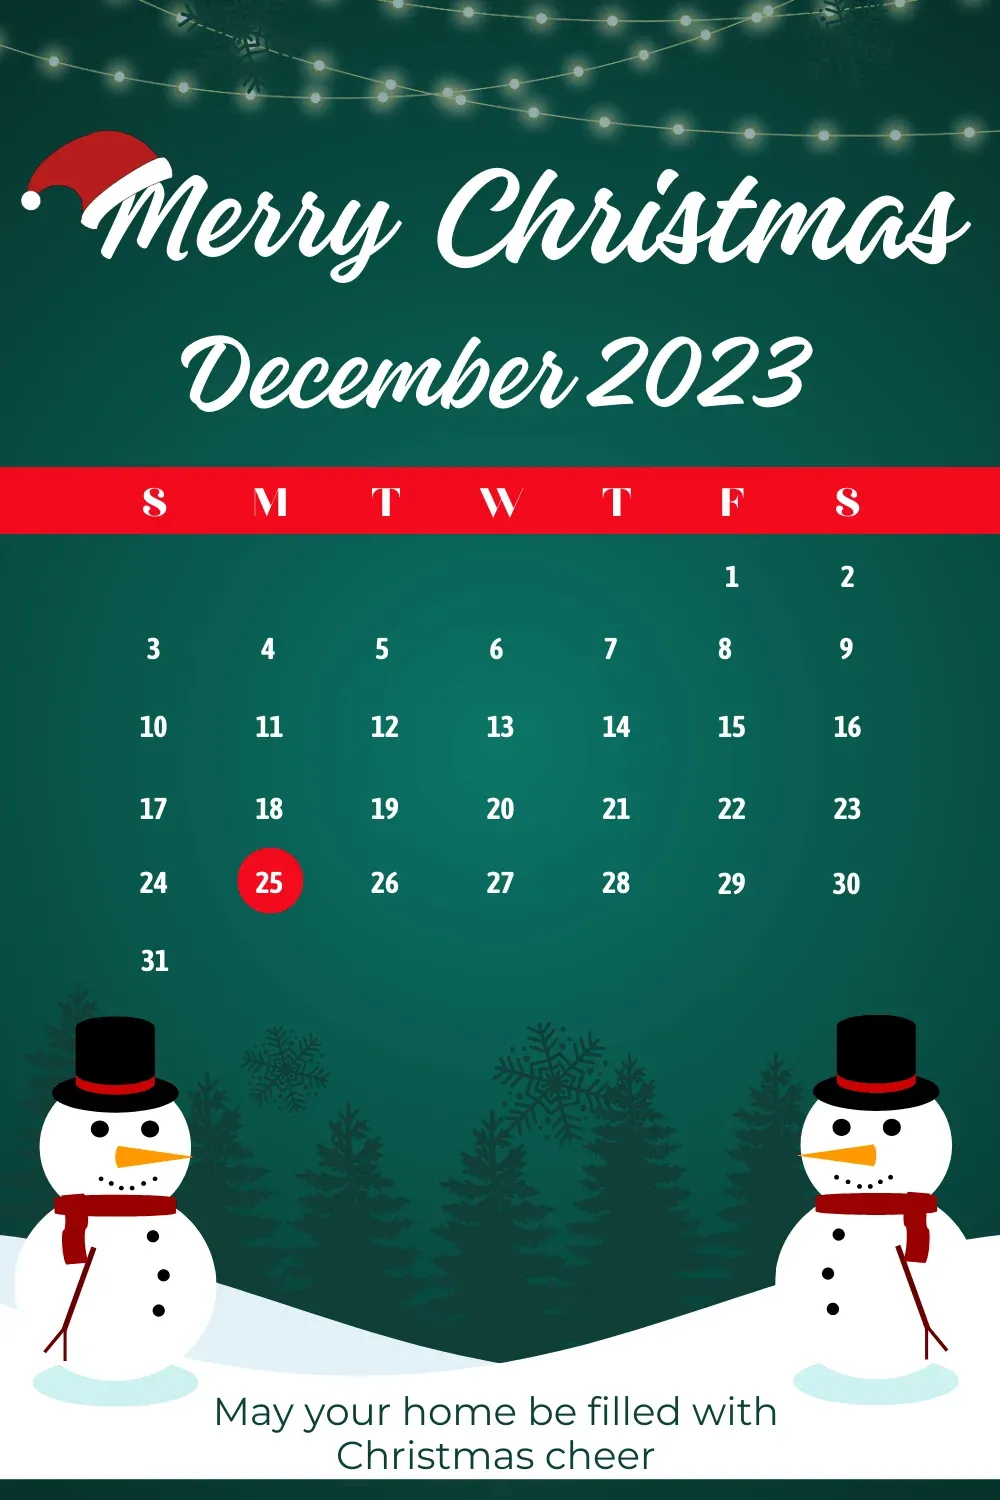 december 2023 christmas theme calendar download